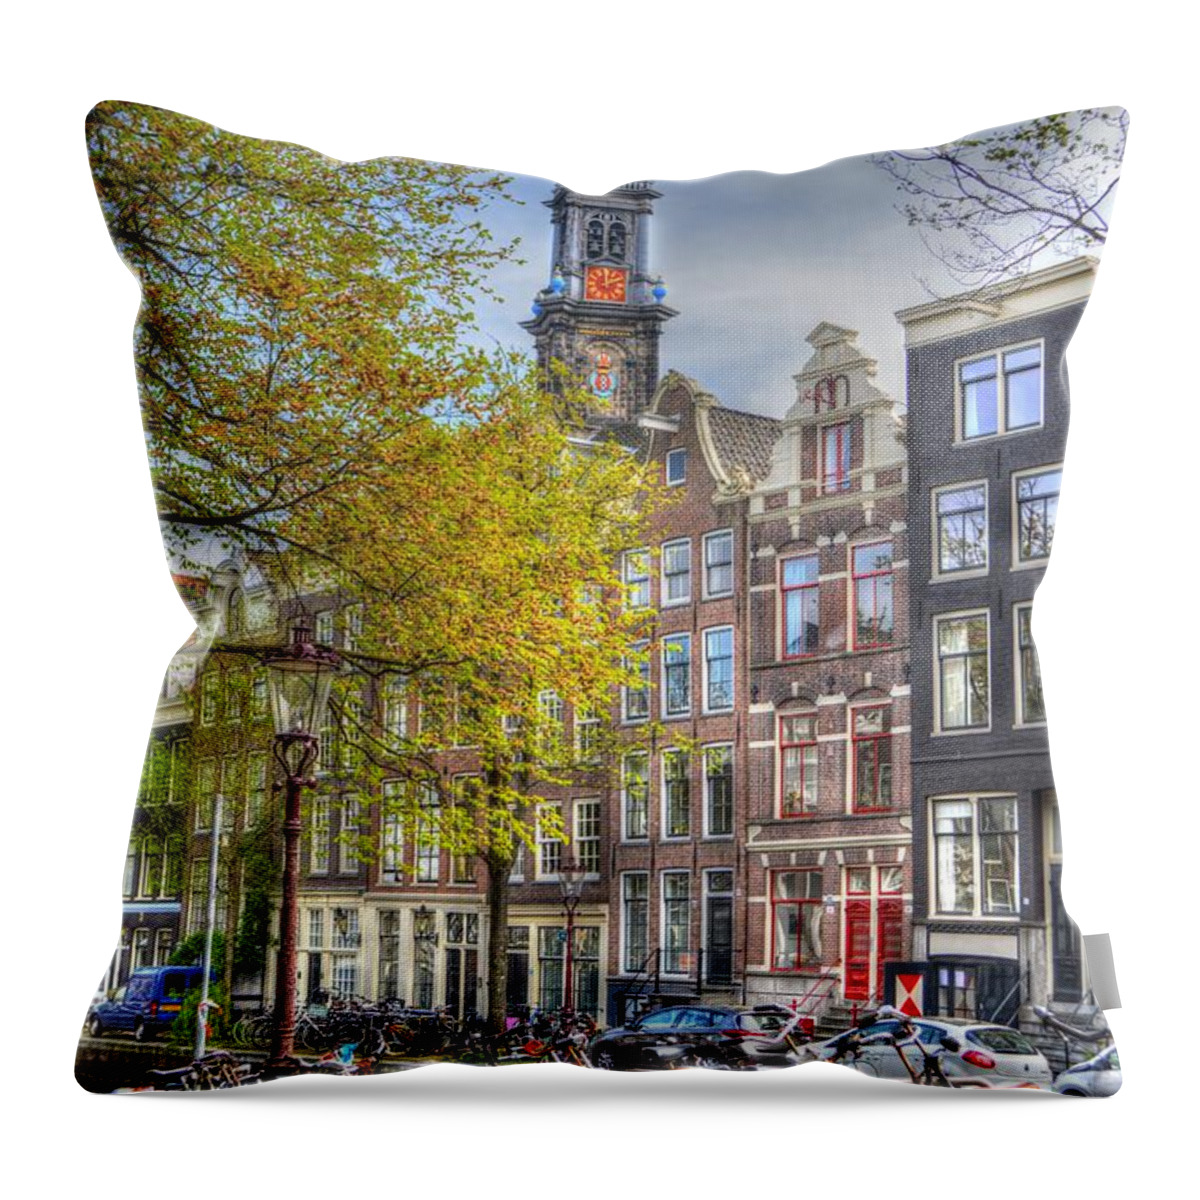 Belgium Throw Pillow featuring the photograph Brussels Belgium by Bill Hamilton